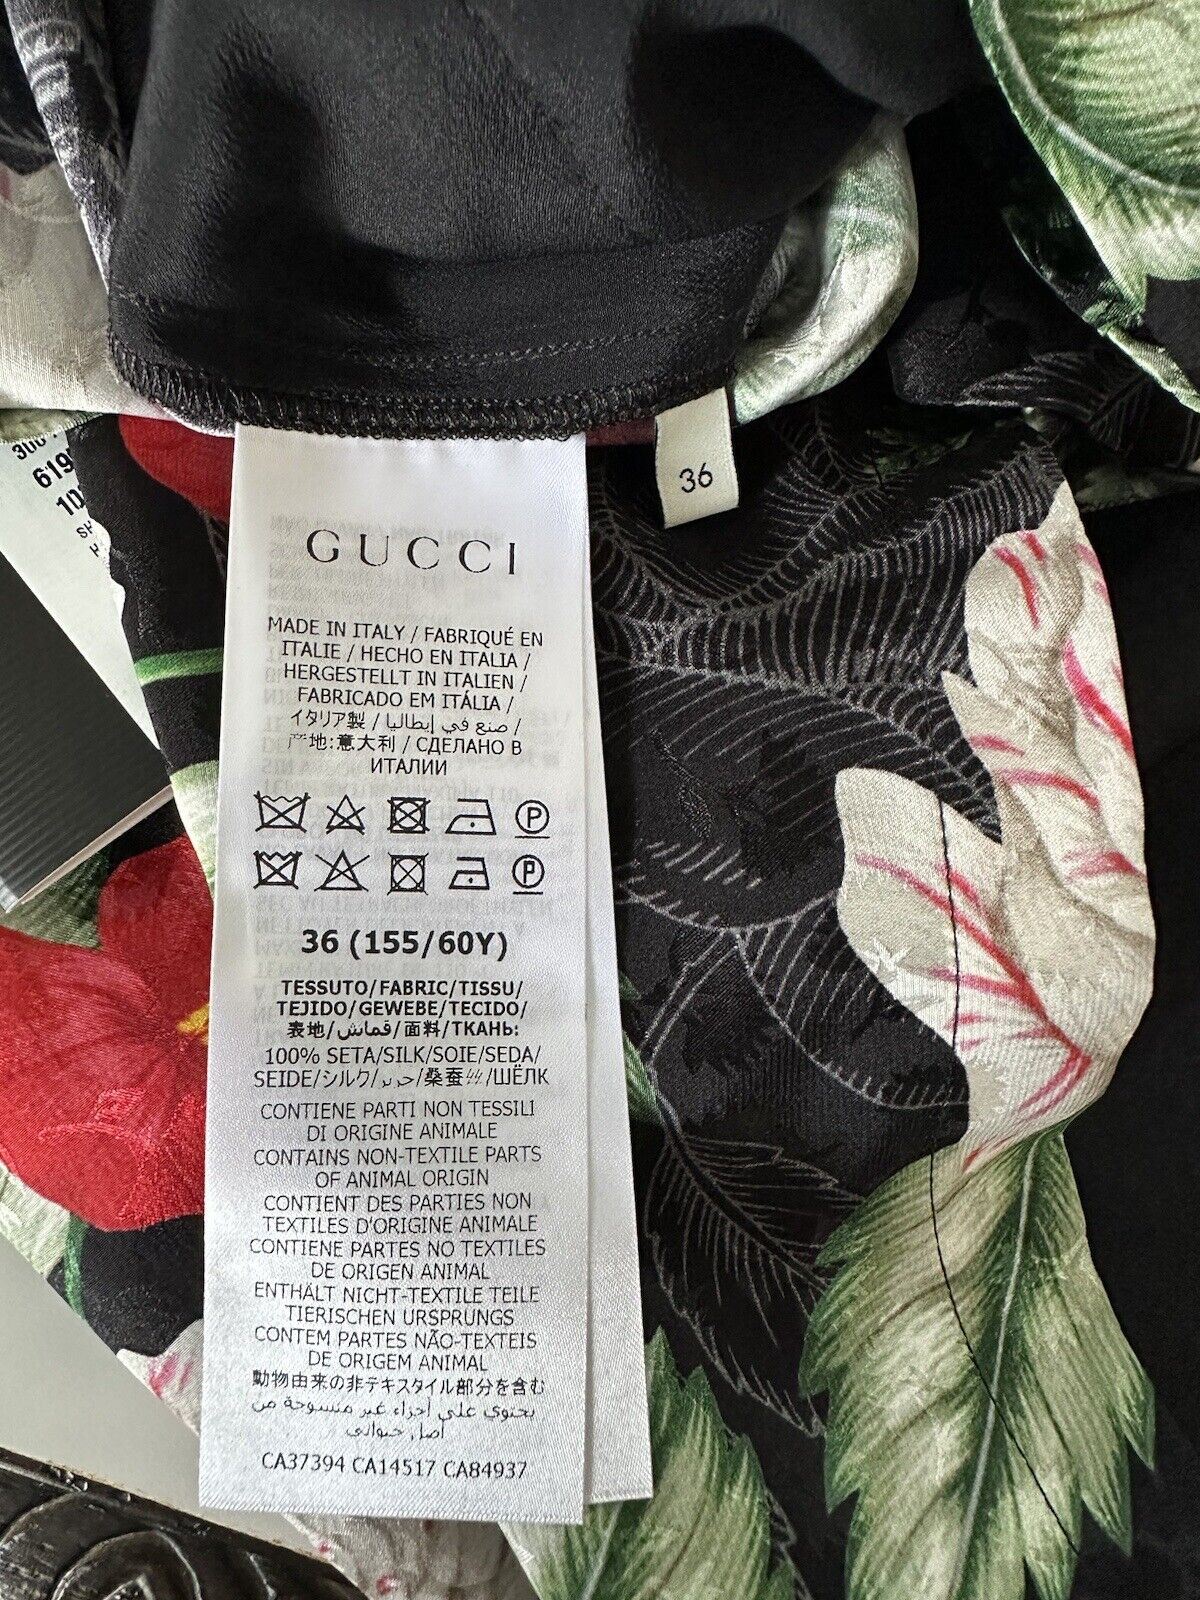 Женские шорты NWT Gucci из 100% шелка с жаккардовым принтом Hawaiian Dream 36 (XS) 619508